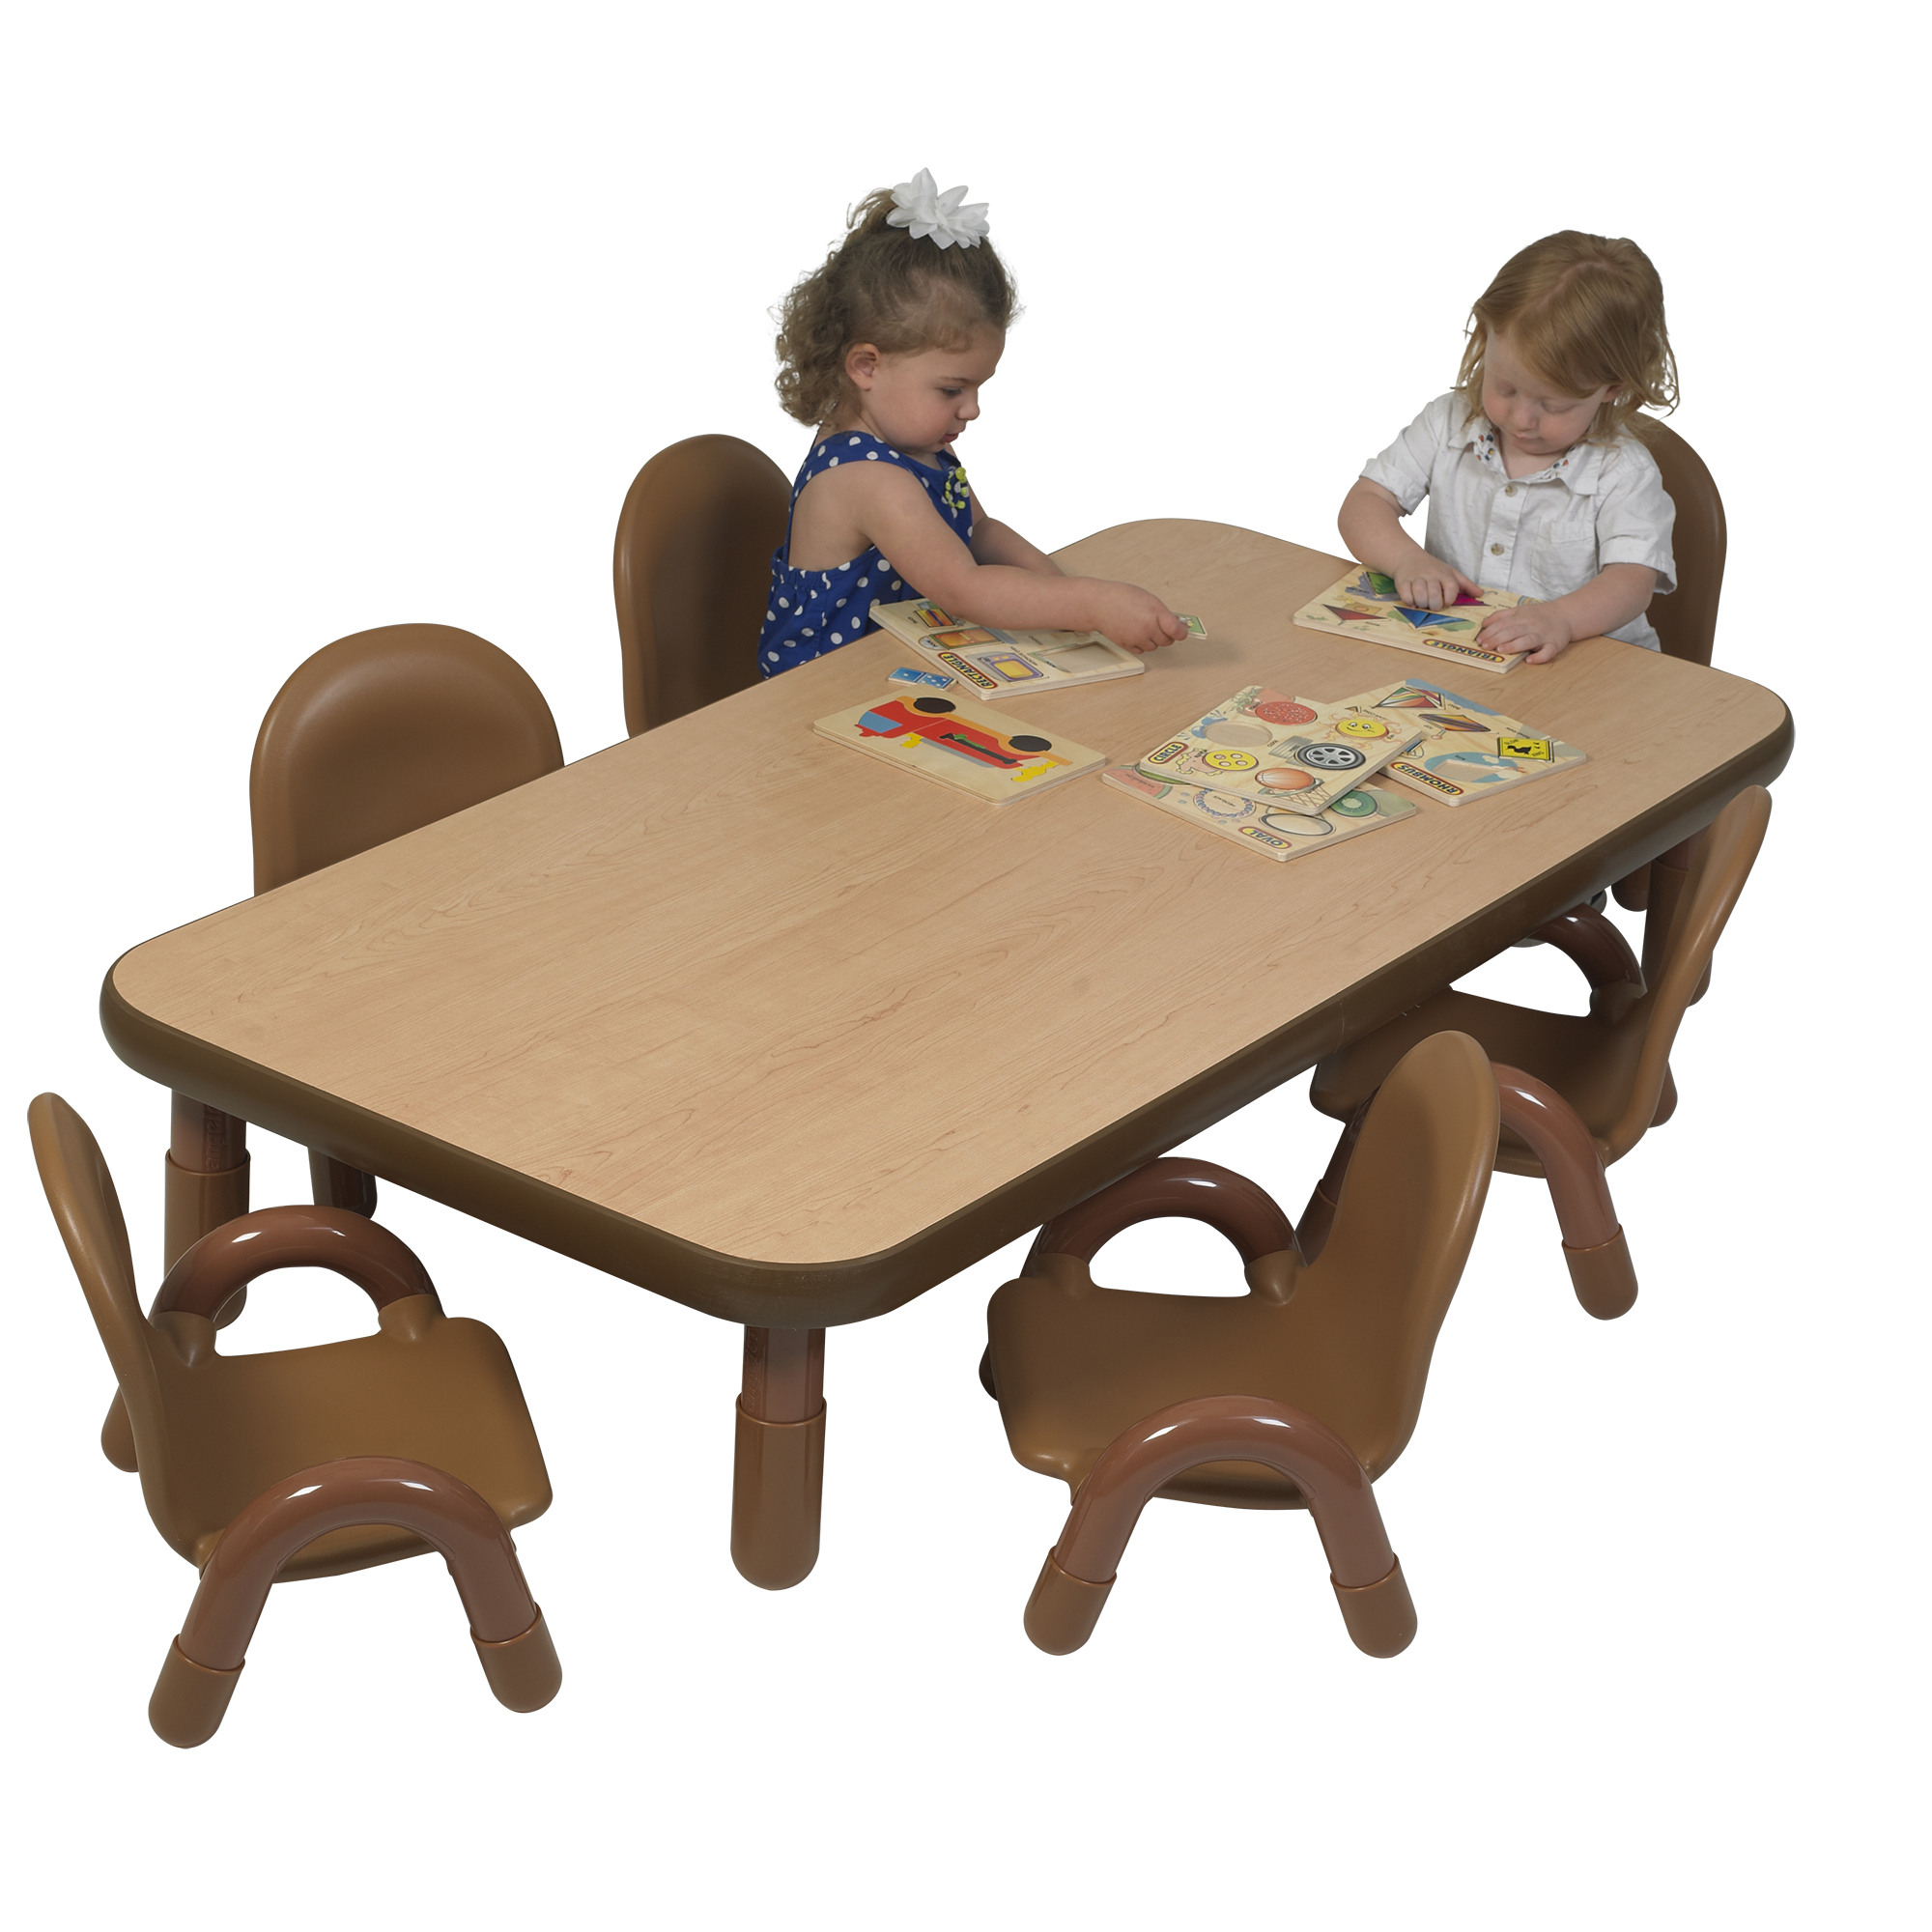 children's table set